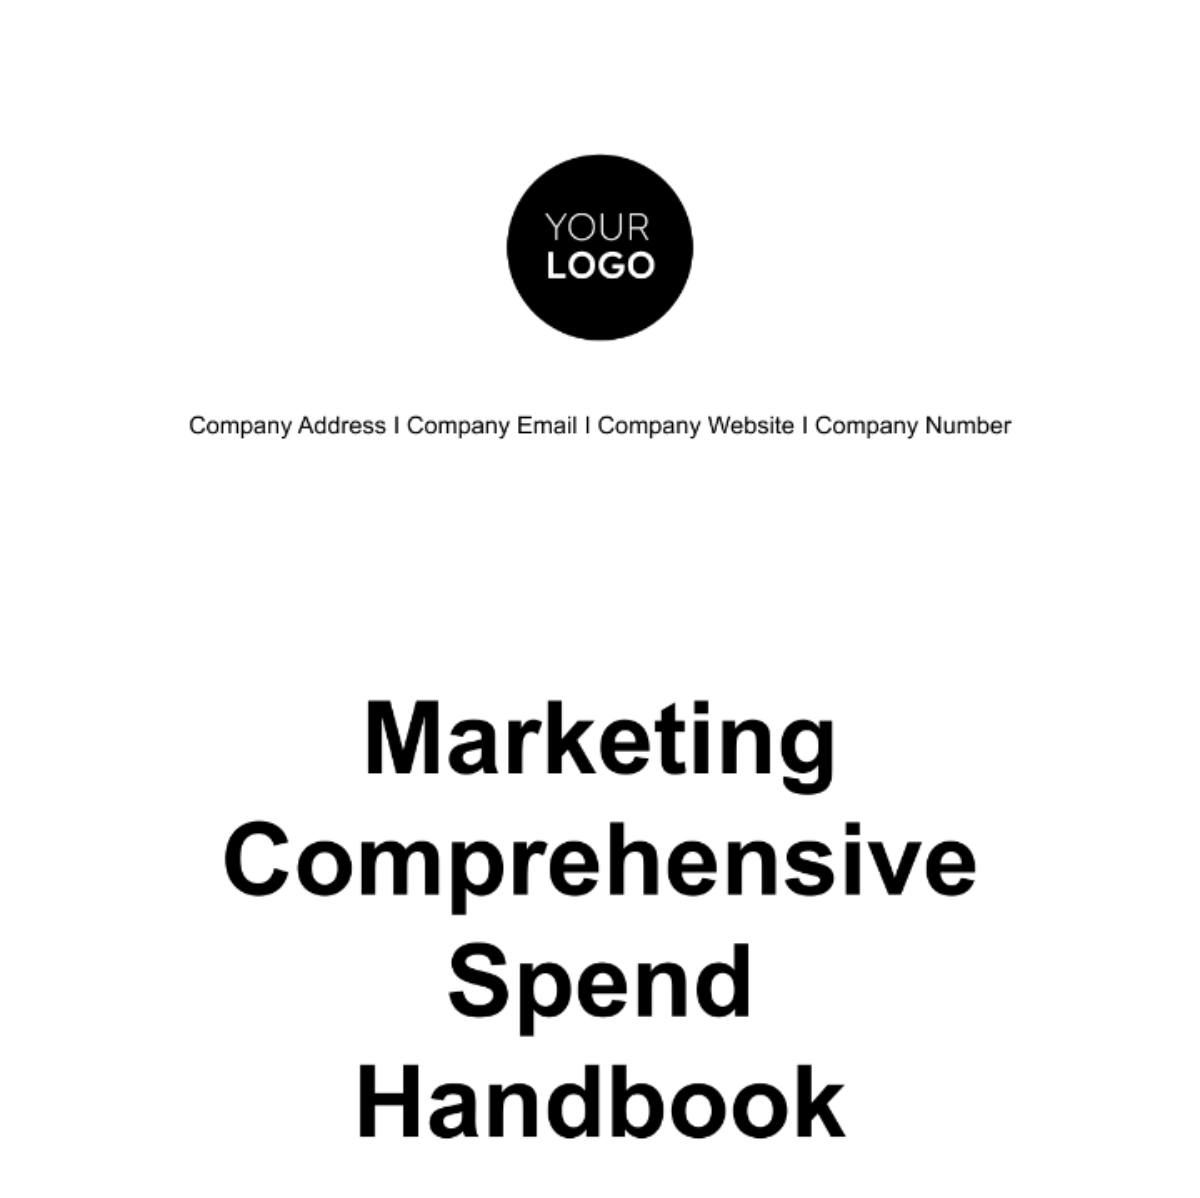 Marketing Comprehensive Spend Handbook Template